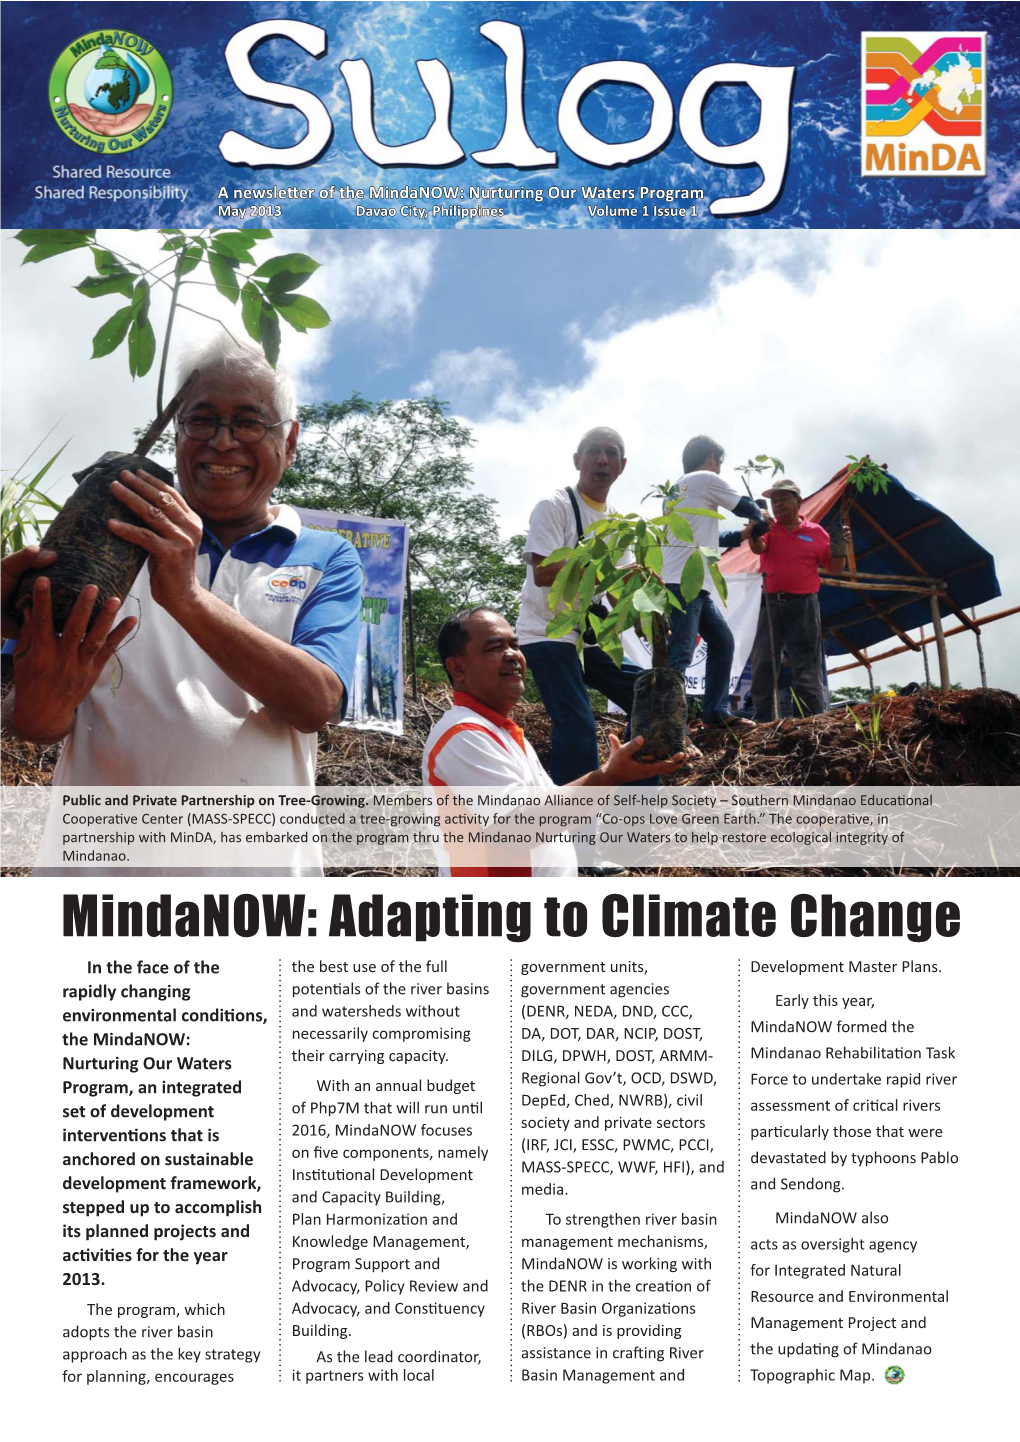 Minda, DENR Establish Davao River Basin Management Alliance